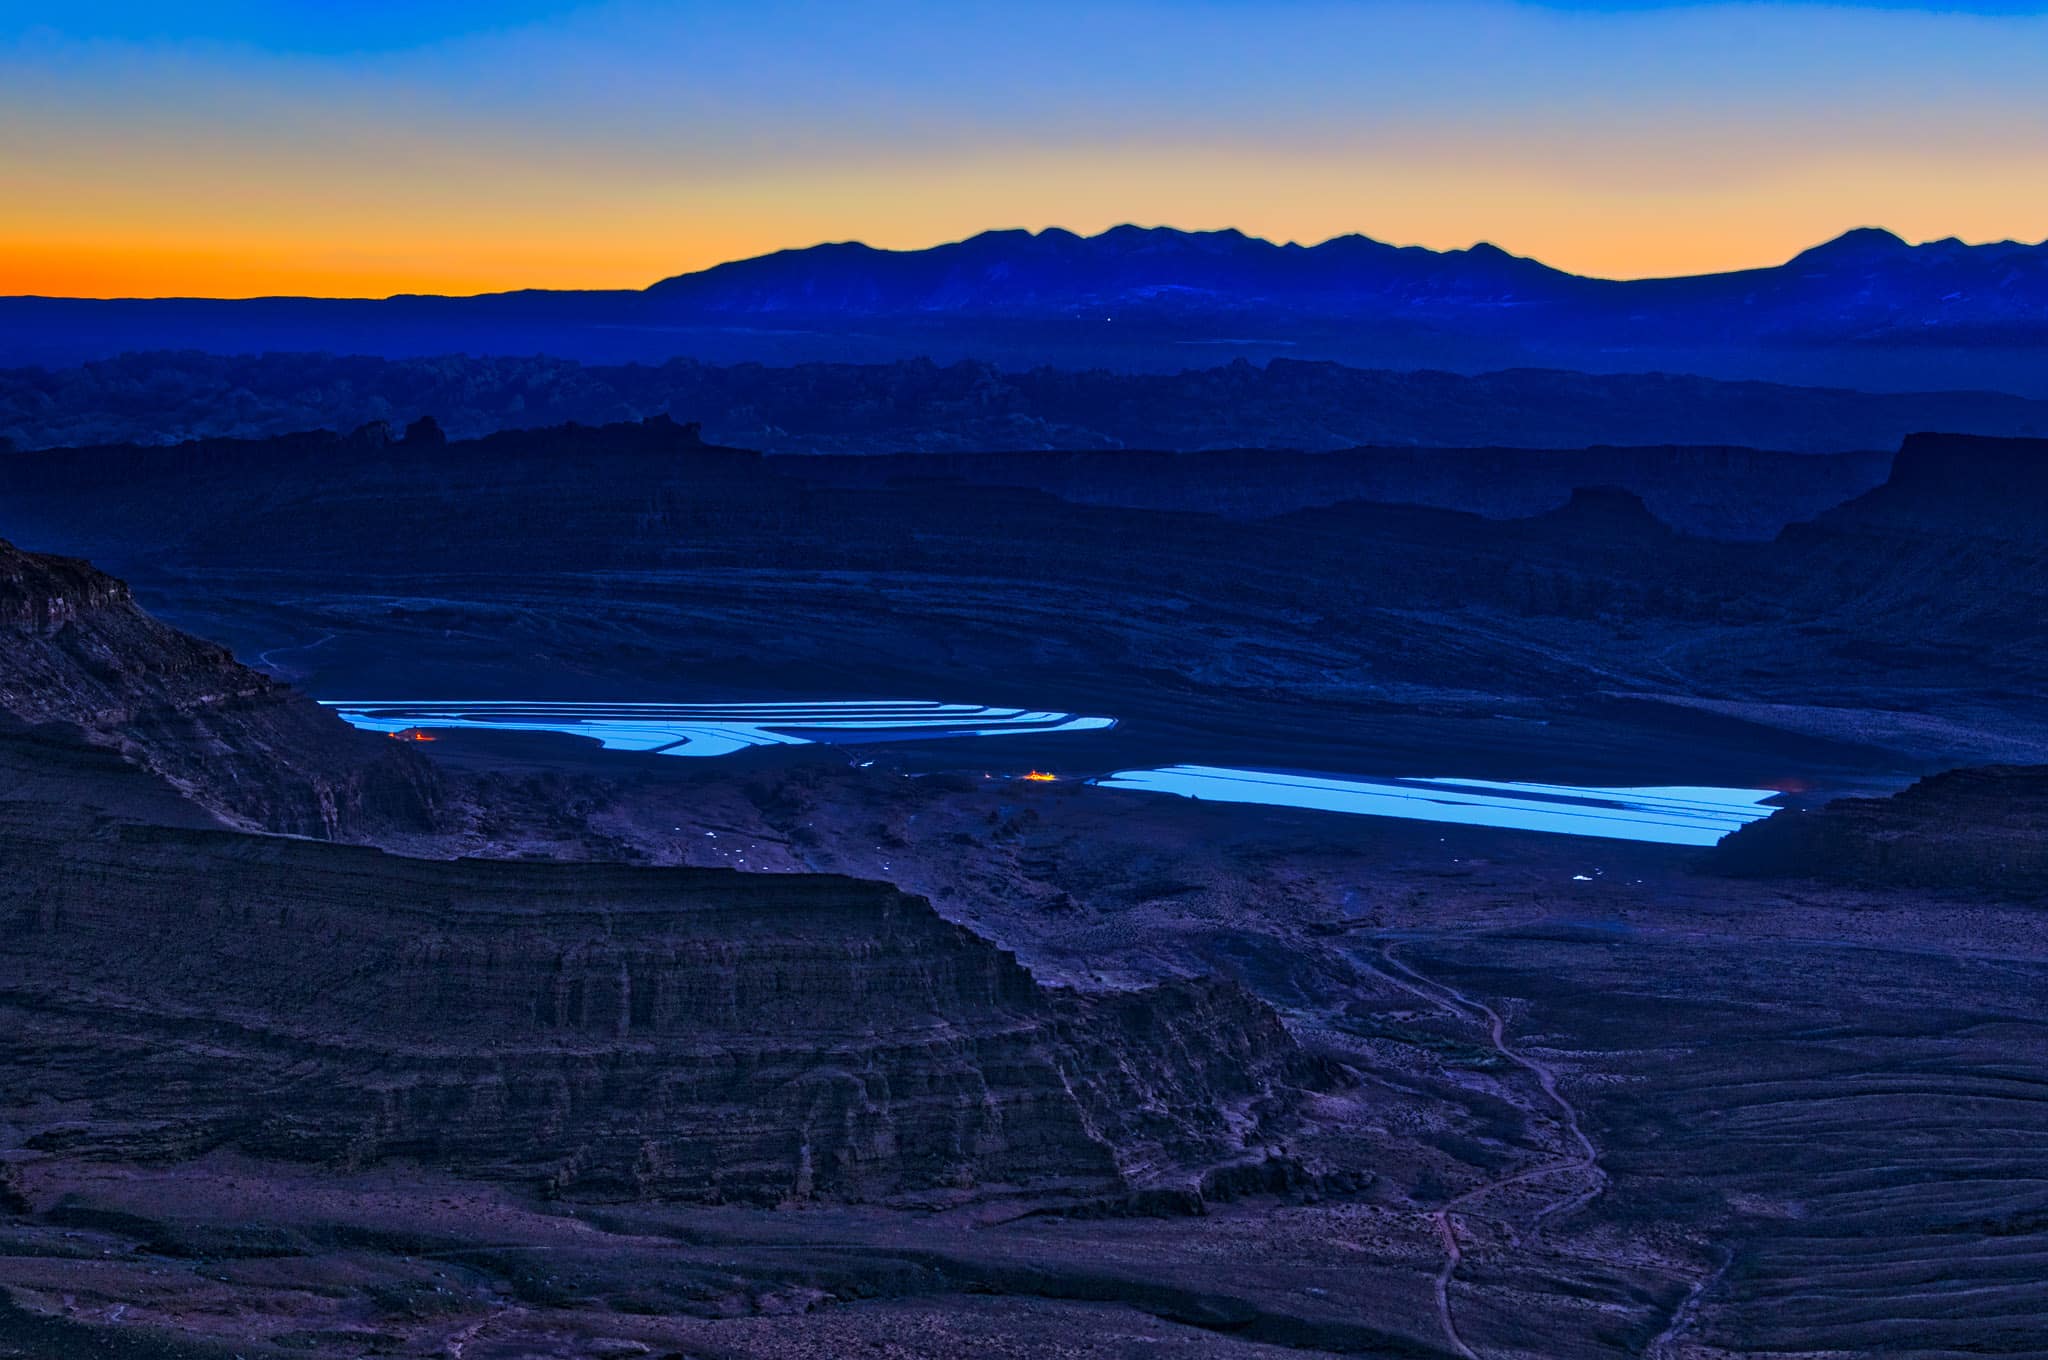 Predawn sky reflected in evaporative ponds of a potash mine southeast of Moab, Utah.